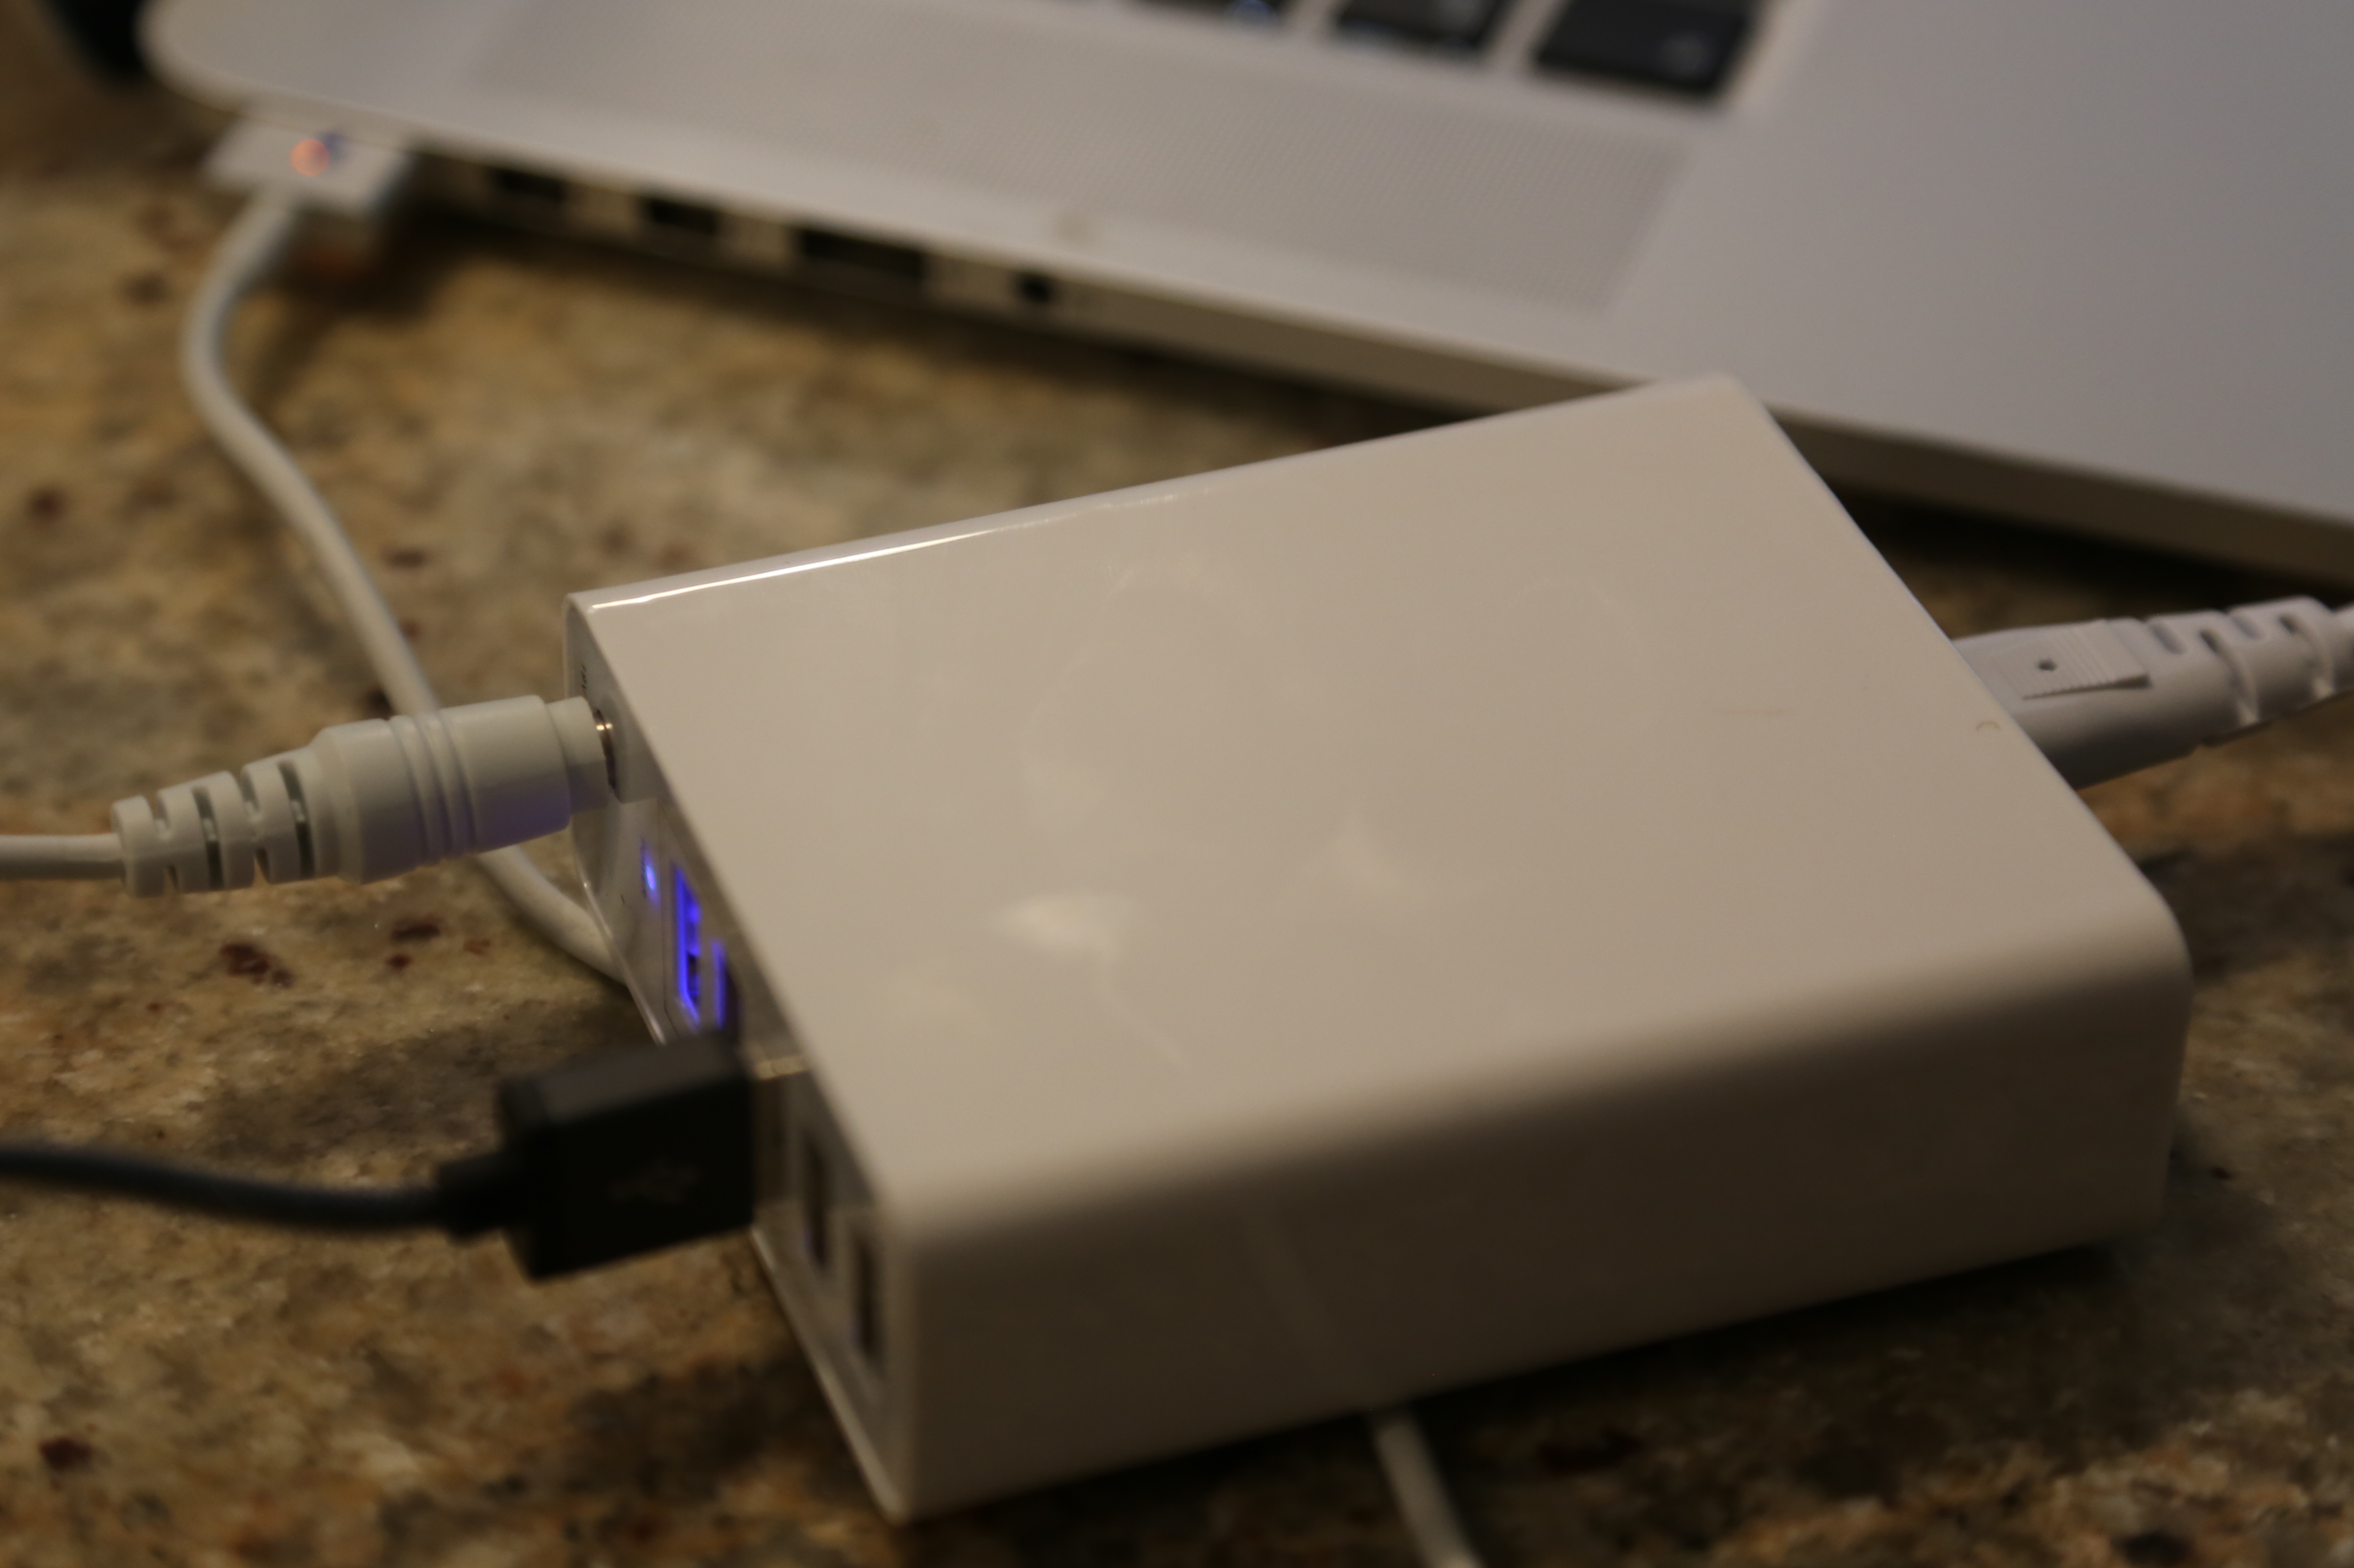 macbook pro magsafe 2 charger broke